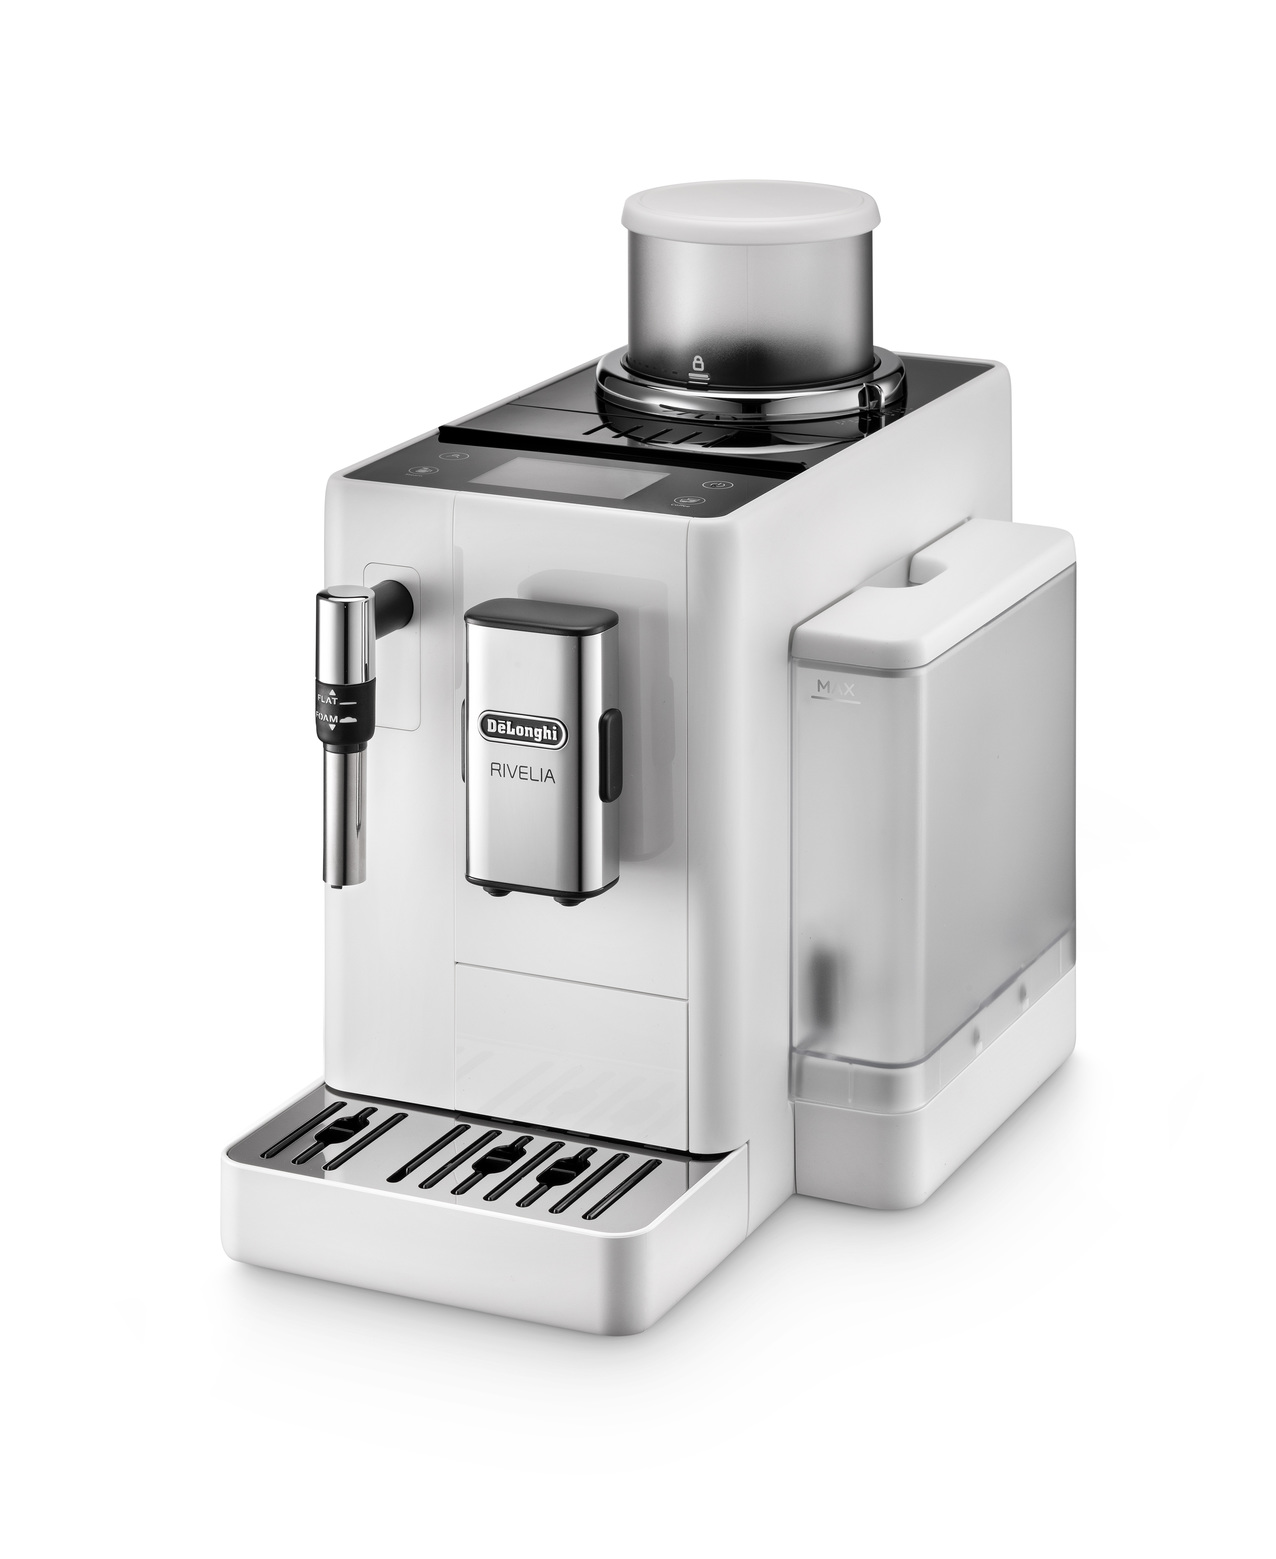 DeLonghi Rivelia EXAM44035W 69990 Euro - Jeder Switch ein Perfetto-Moment – mit dem neuen Rivelia Kaffeevollautomat von De’Longhi